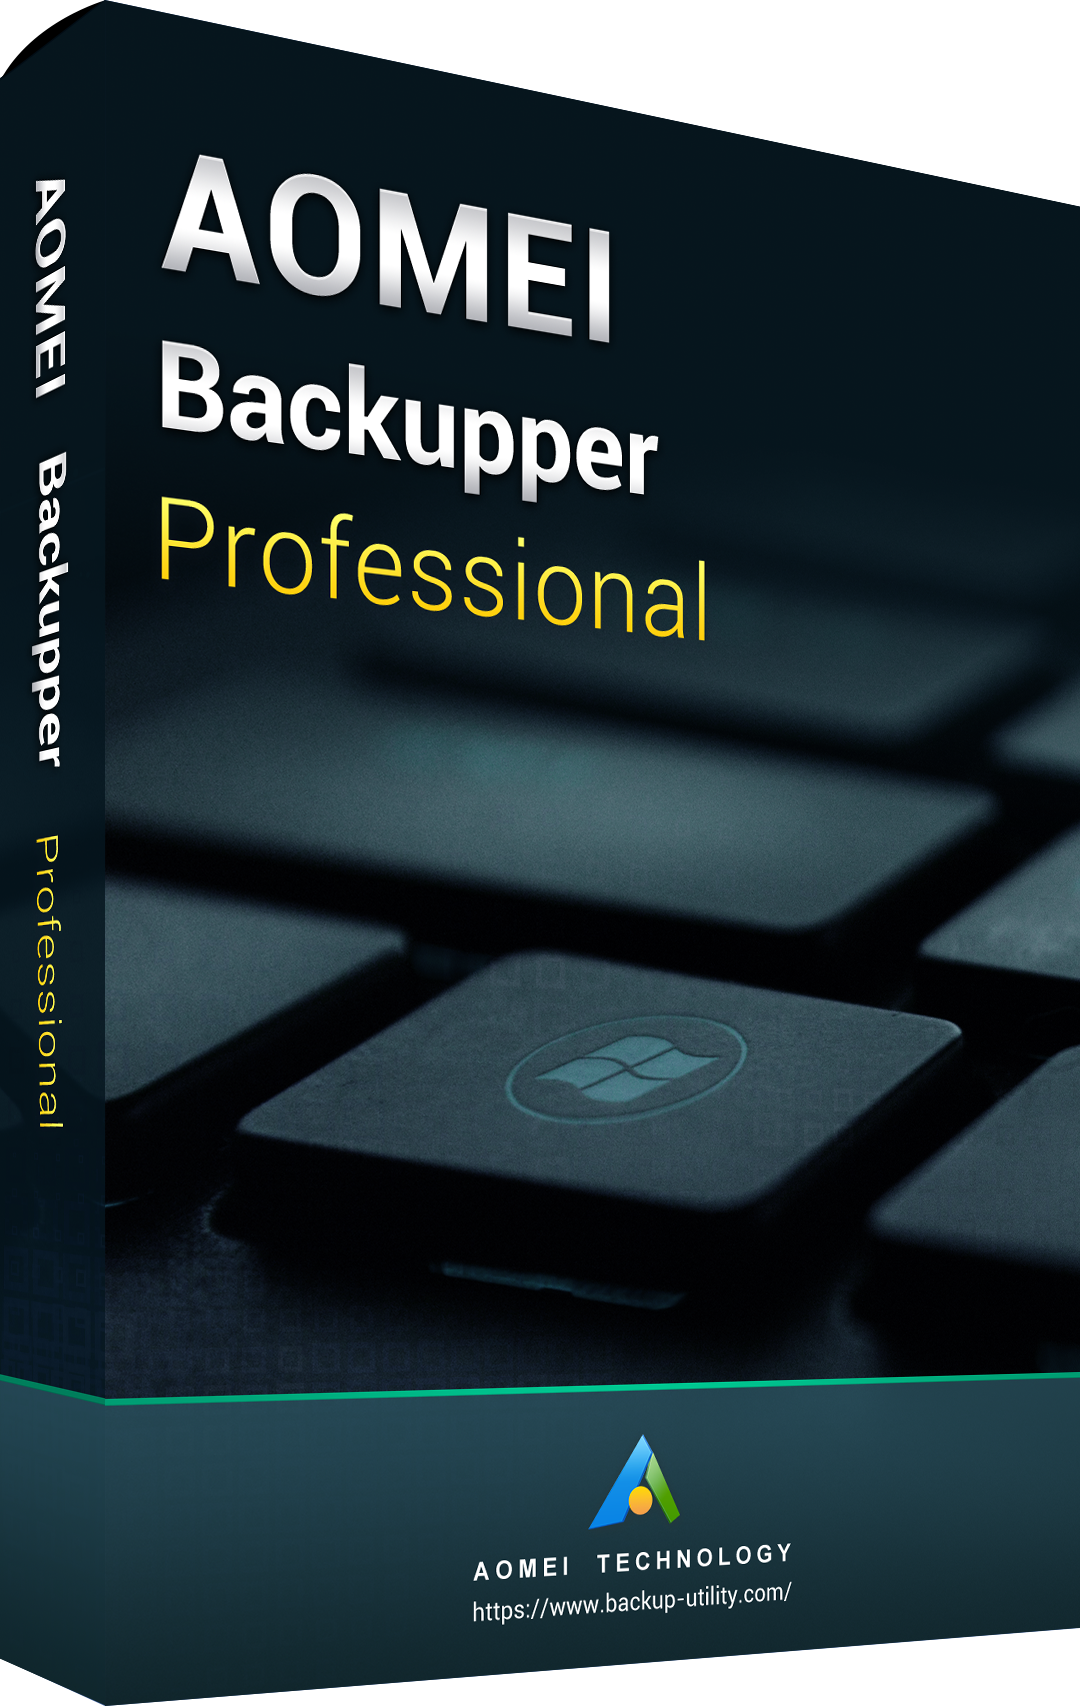 AOMEI Backupper Professional 7.3.1 for ios instal free